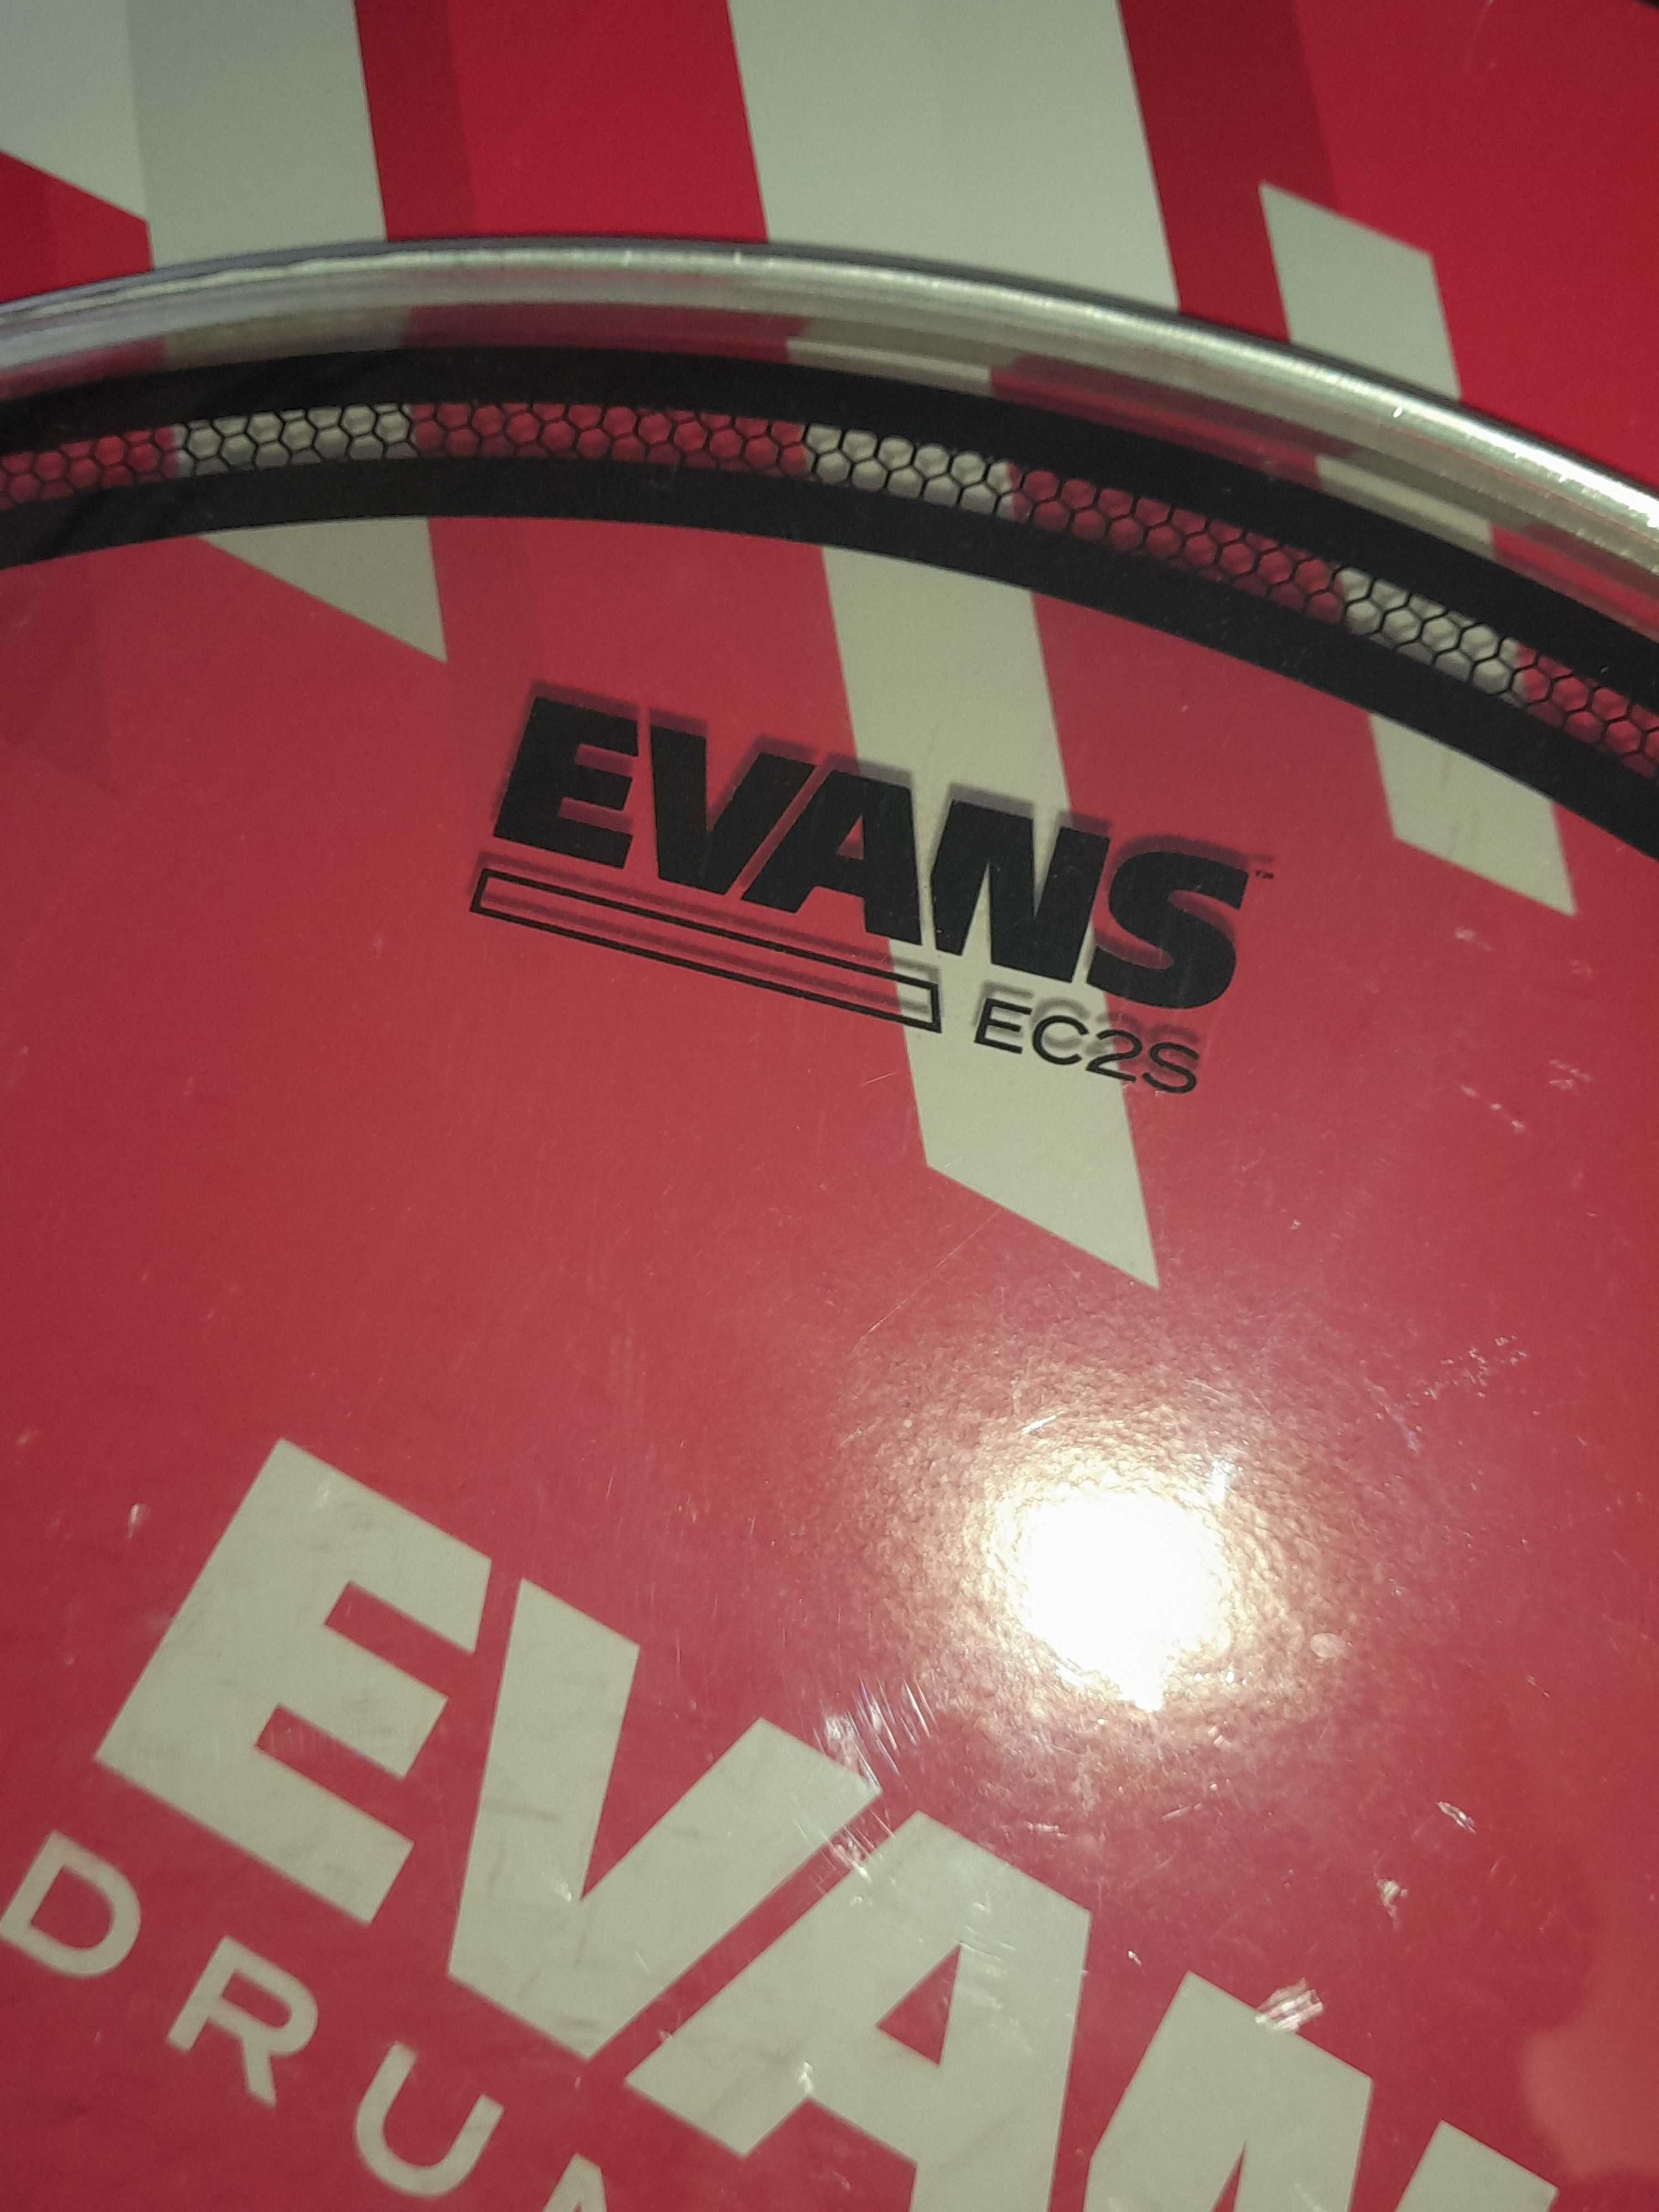 Pele Evans EC2S 16"